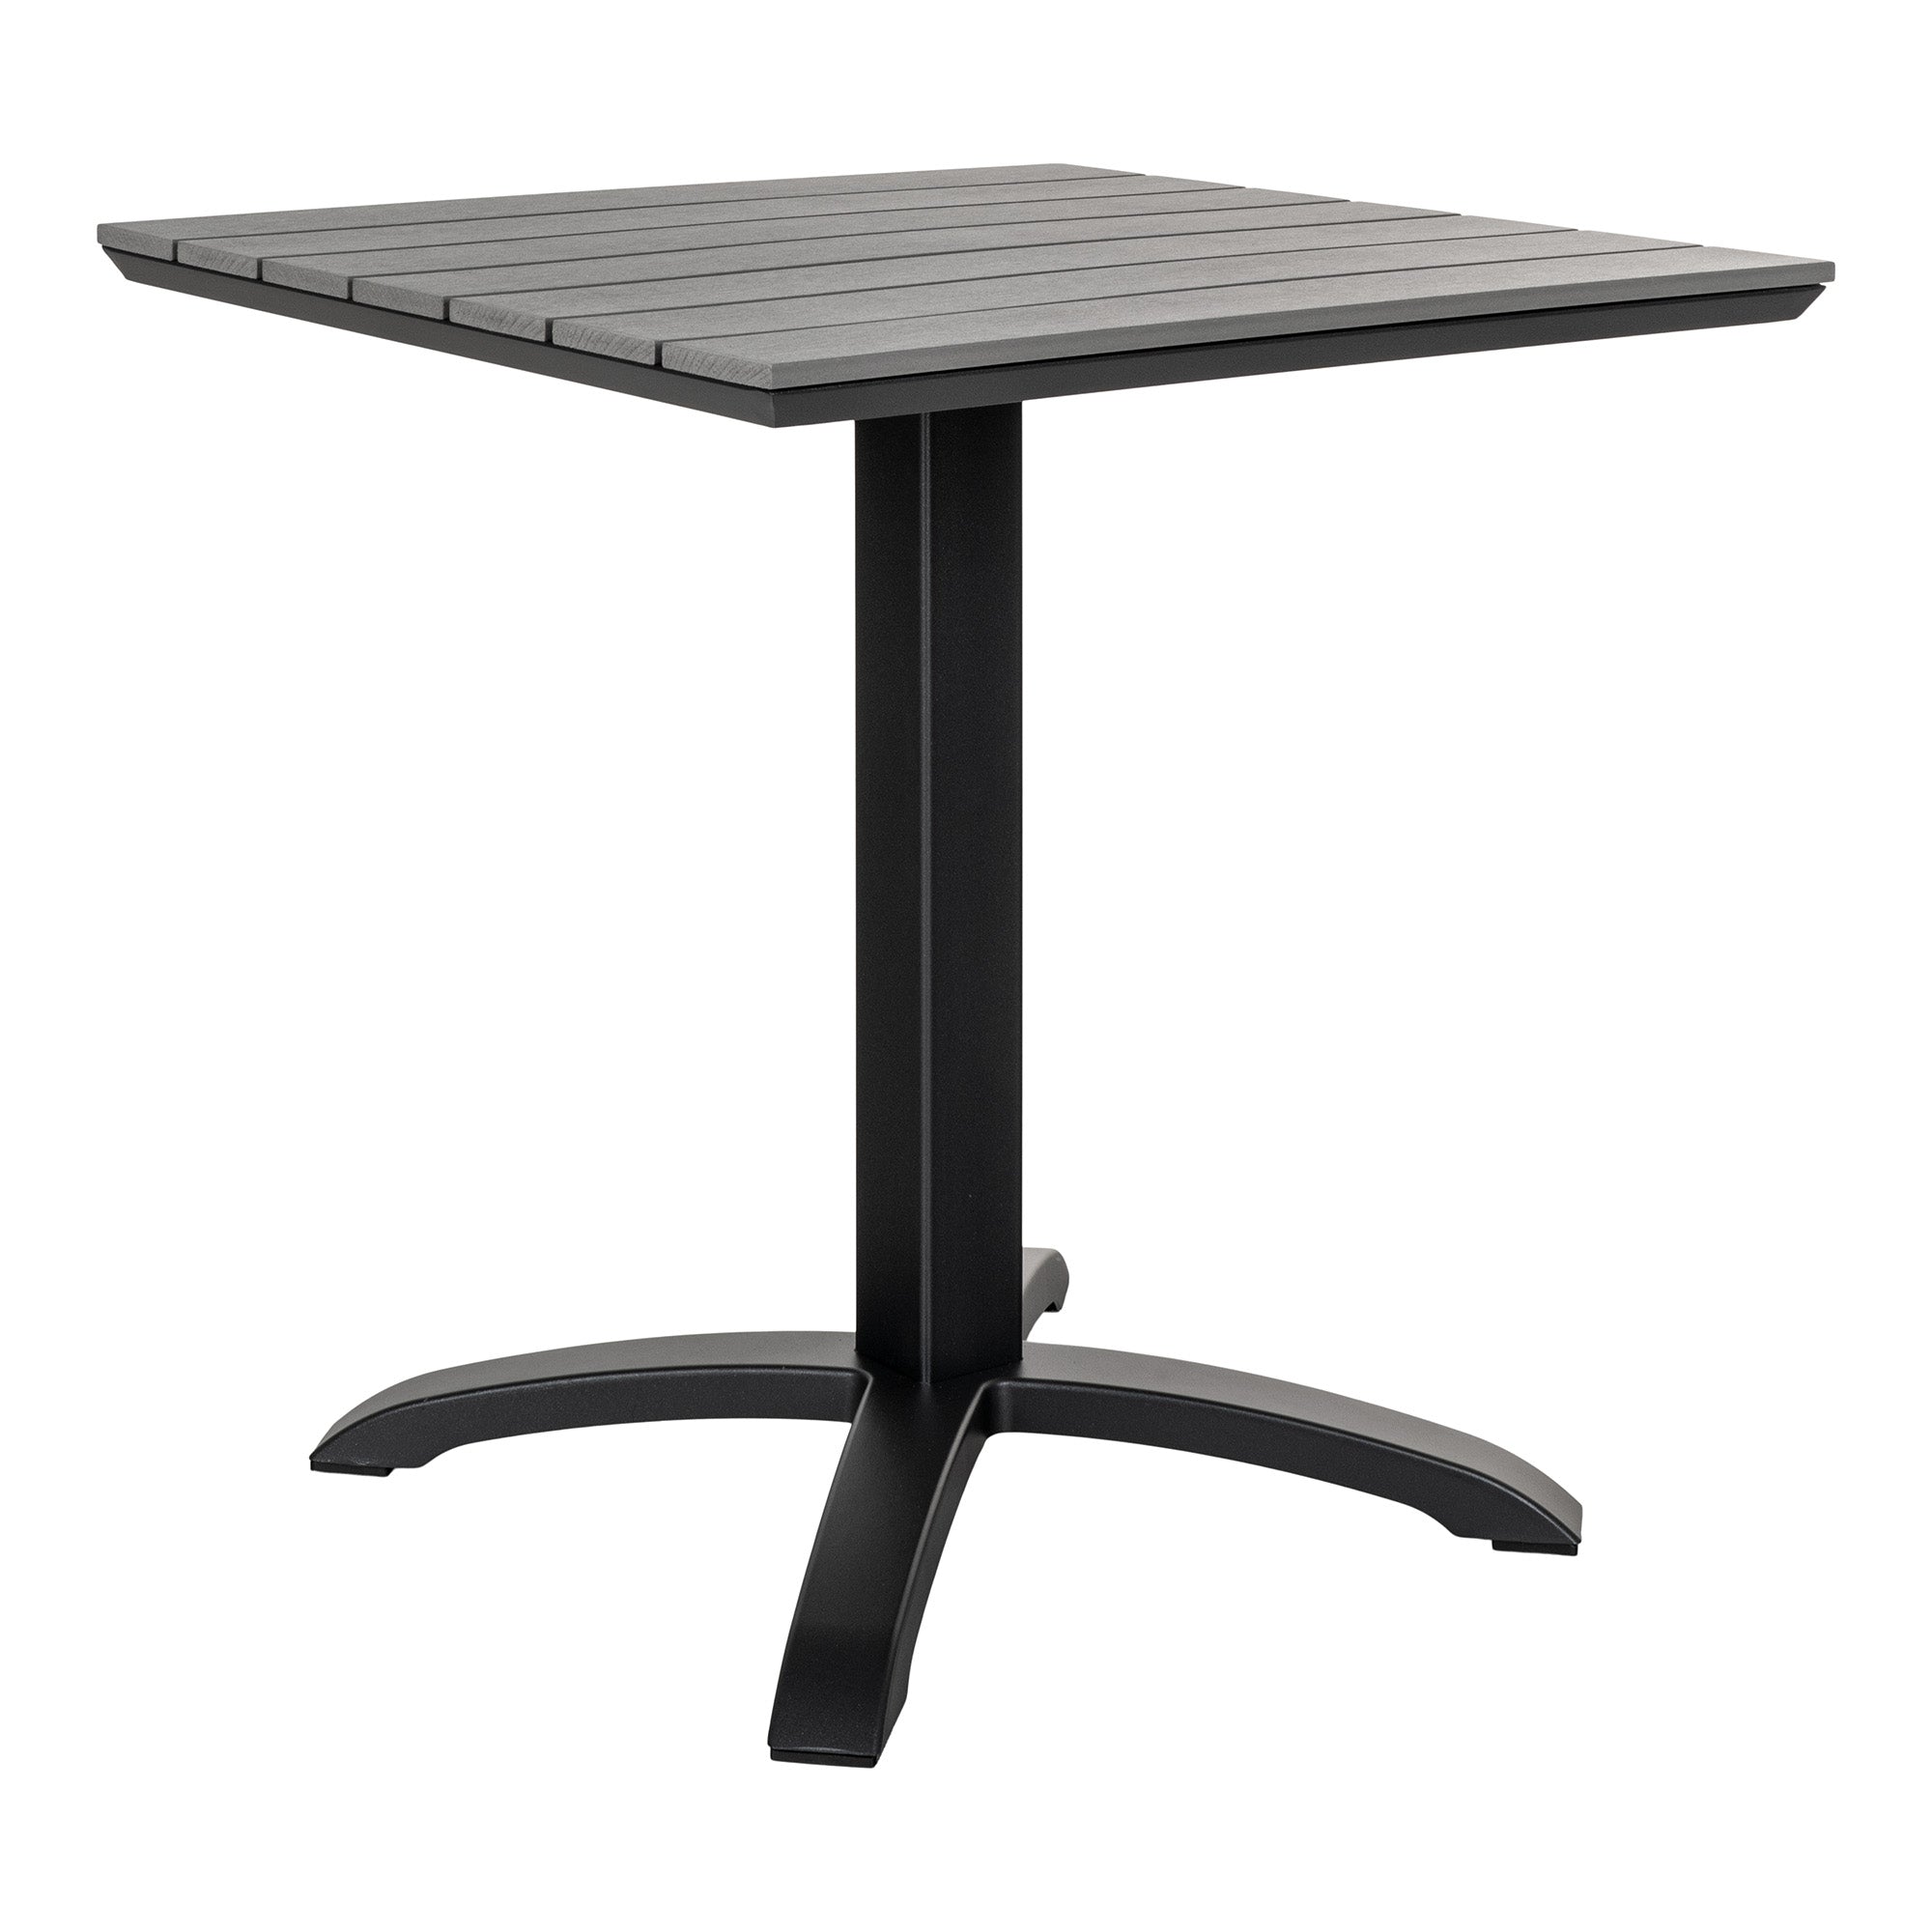 Se Chicago Cafébord - Cafébord med bordplade i grå nonwood og sorte ben, 70x70x72 cm hos Billige Bolig Møbler